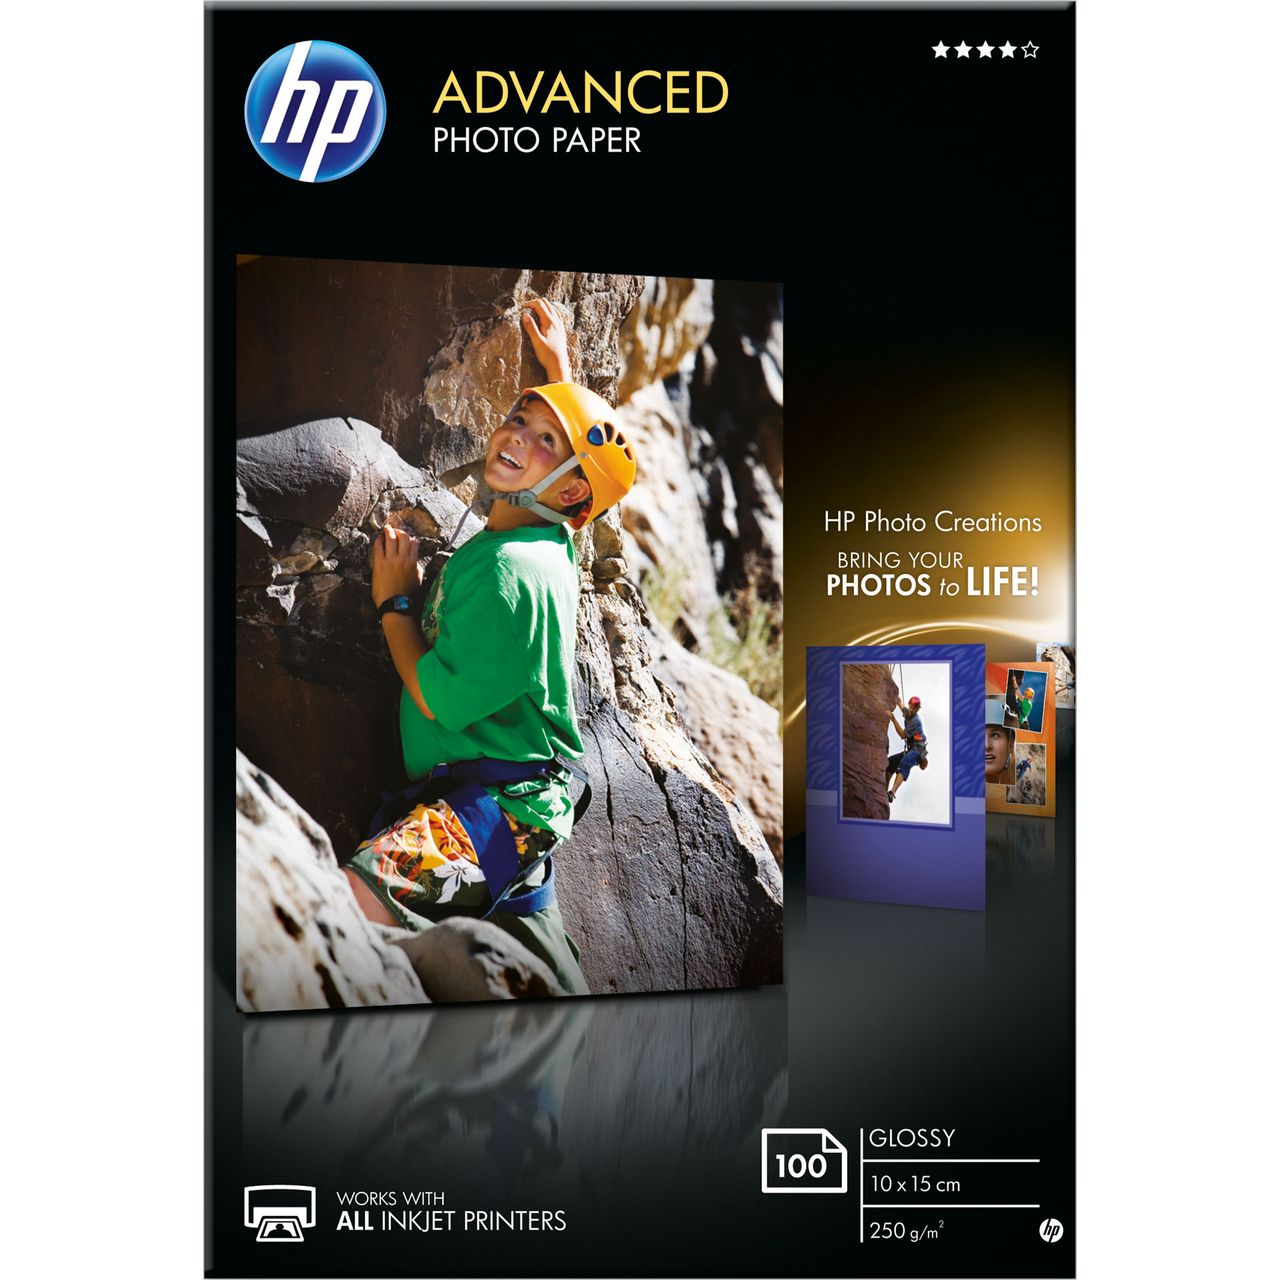 HP Advanced Glossy Photo Paper-100 sheet (10 x 15 cm) Review